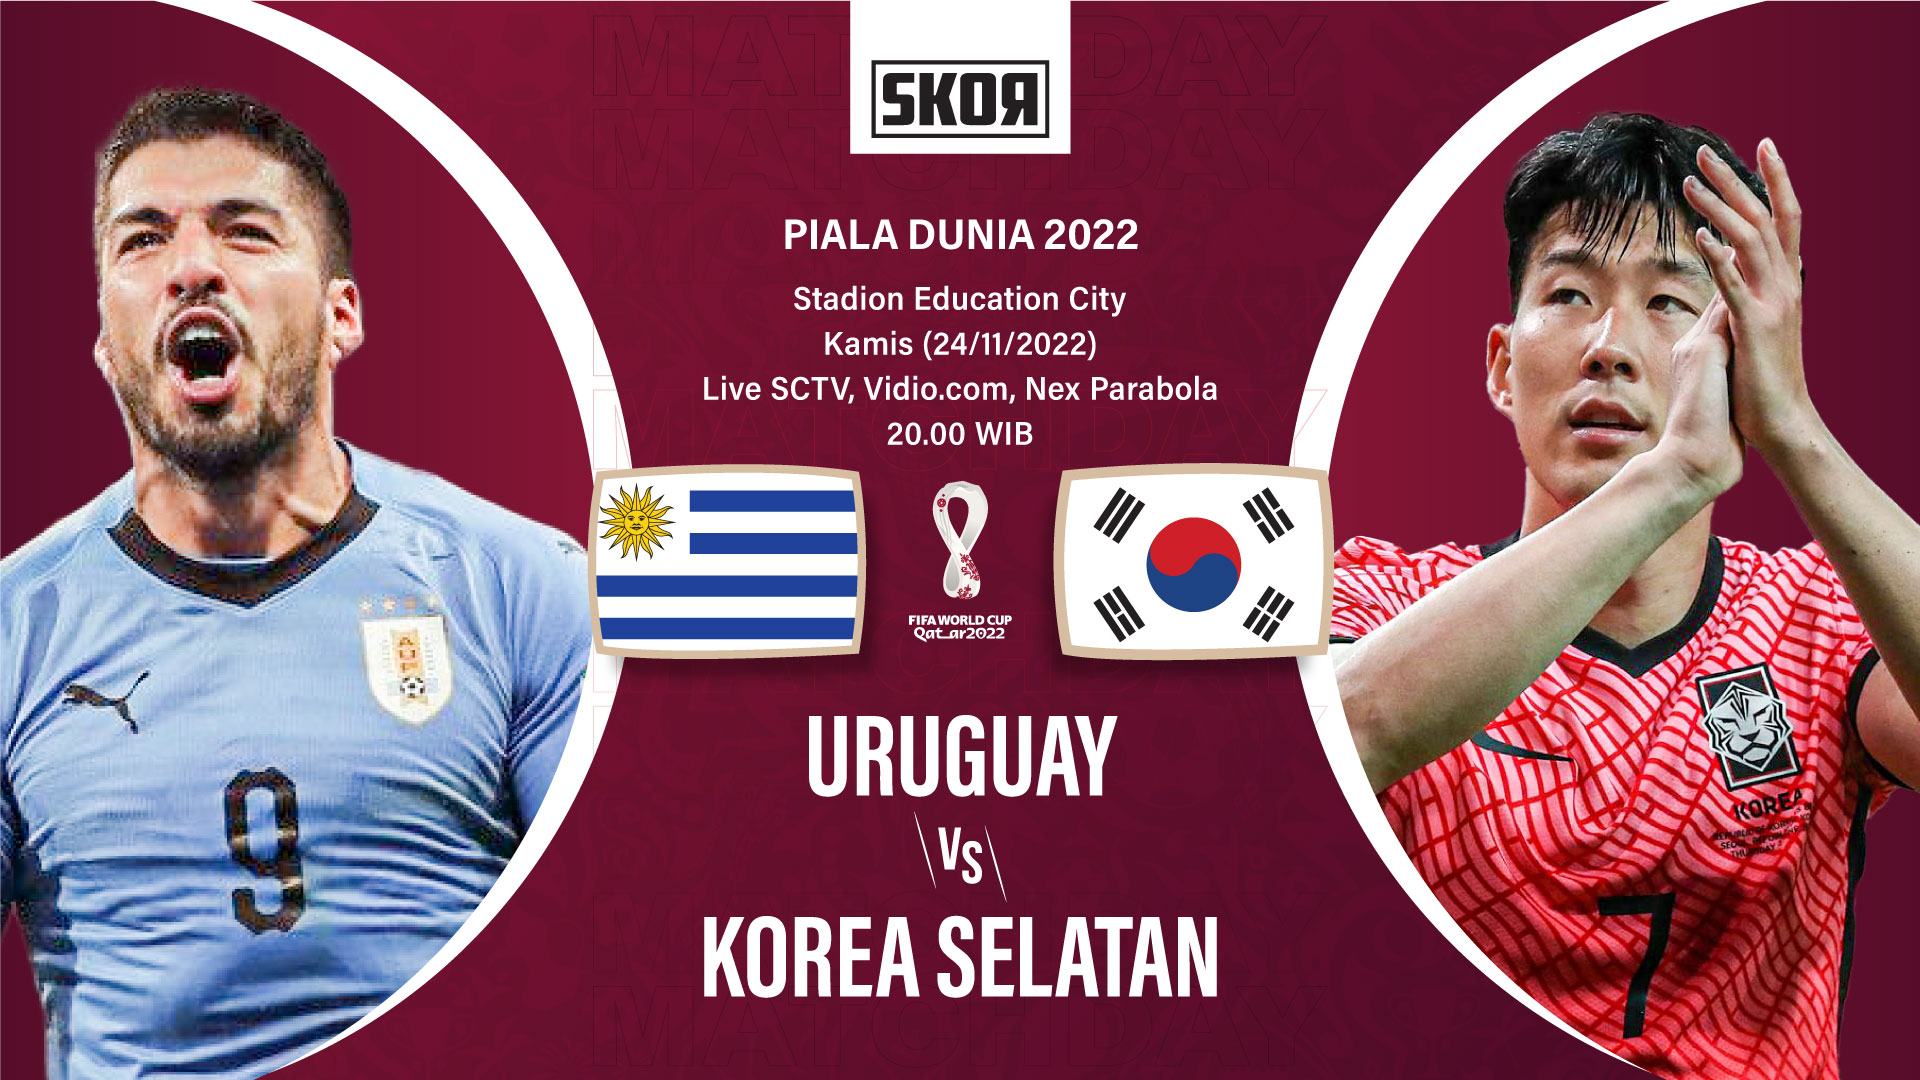 Piala Dunia 2022: 5 Fakta Menarik Uruguay vs Korea Selatan